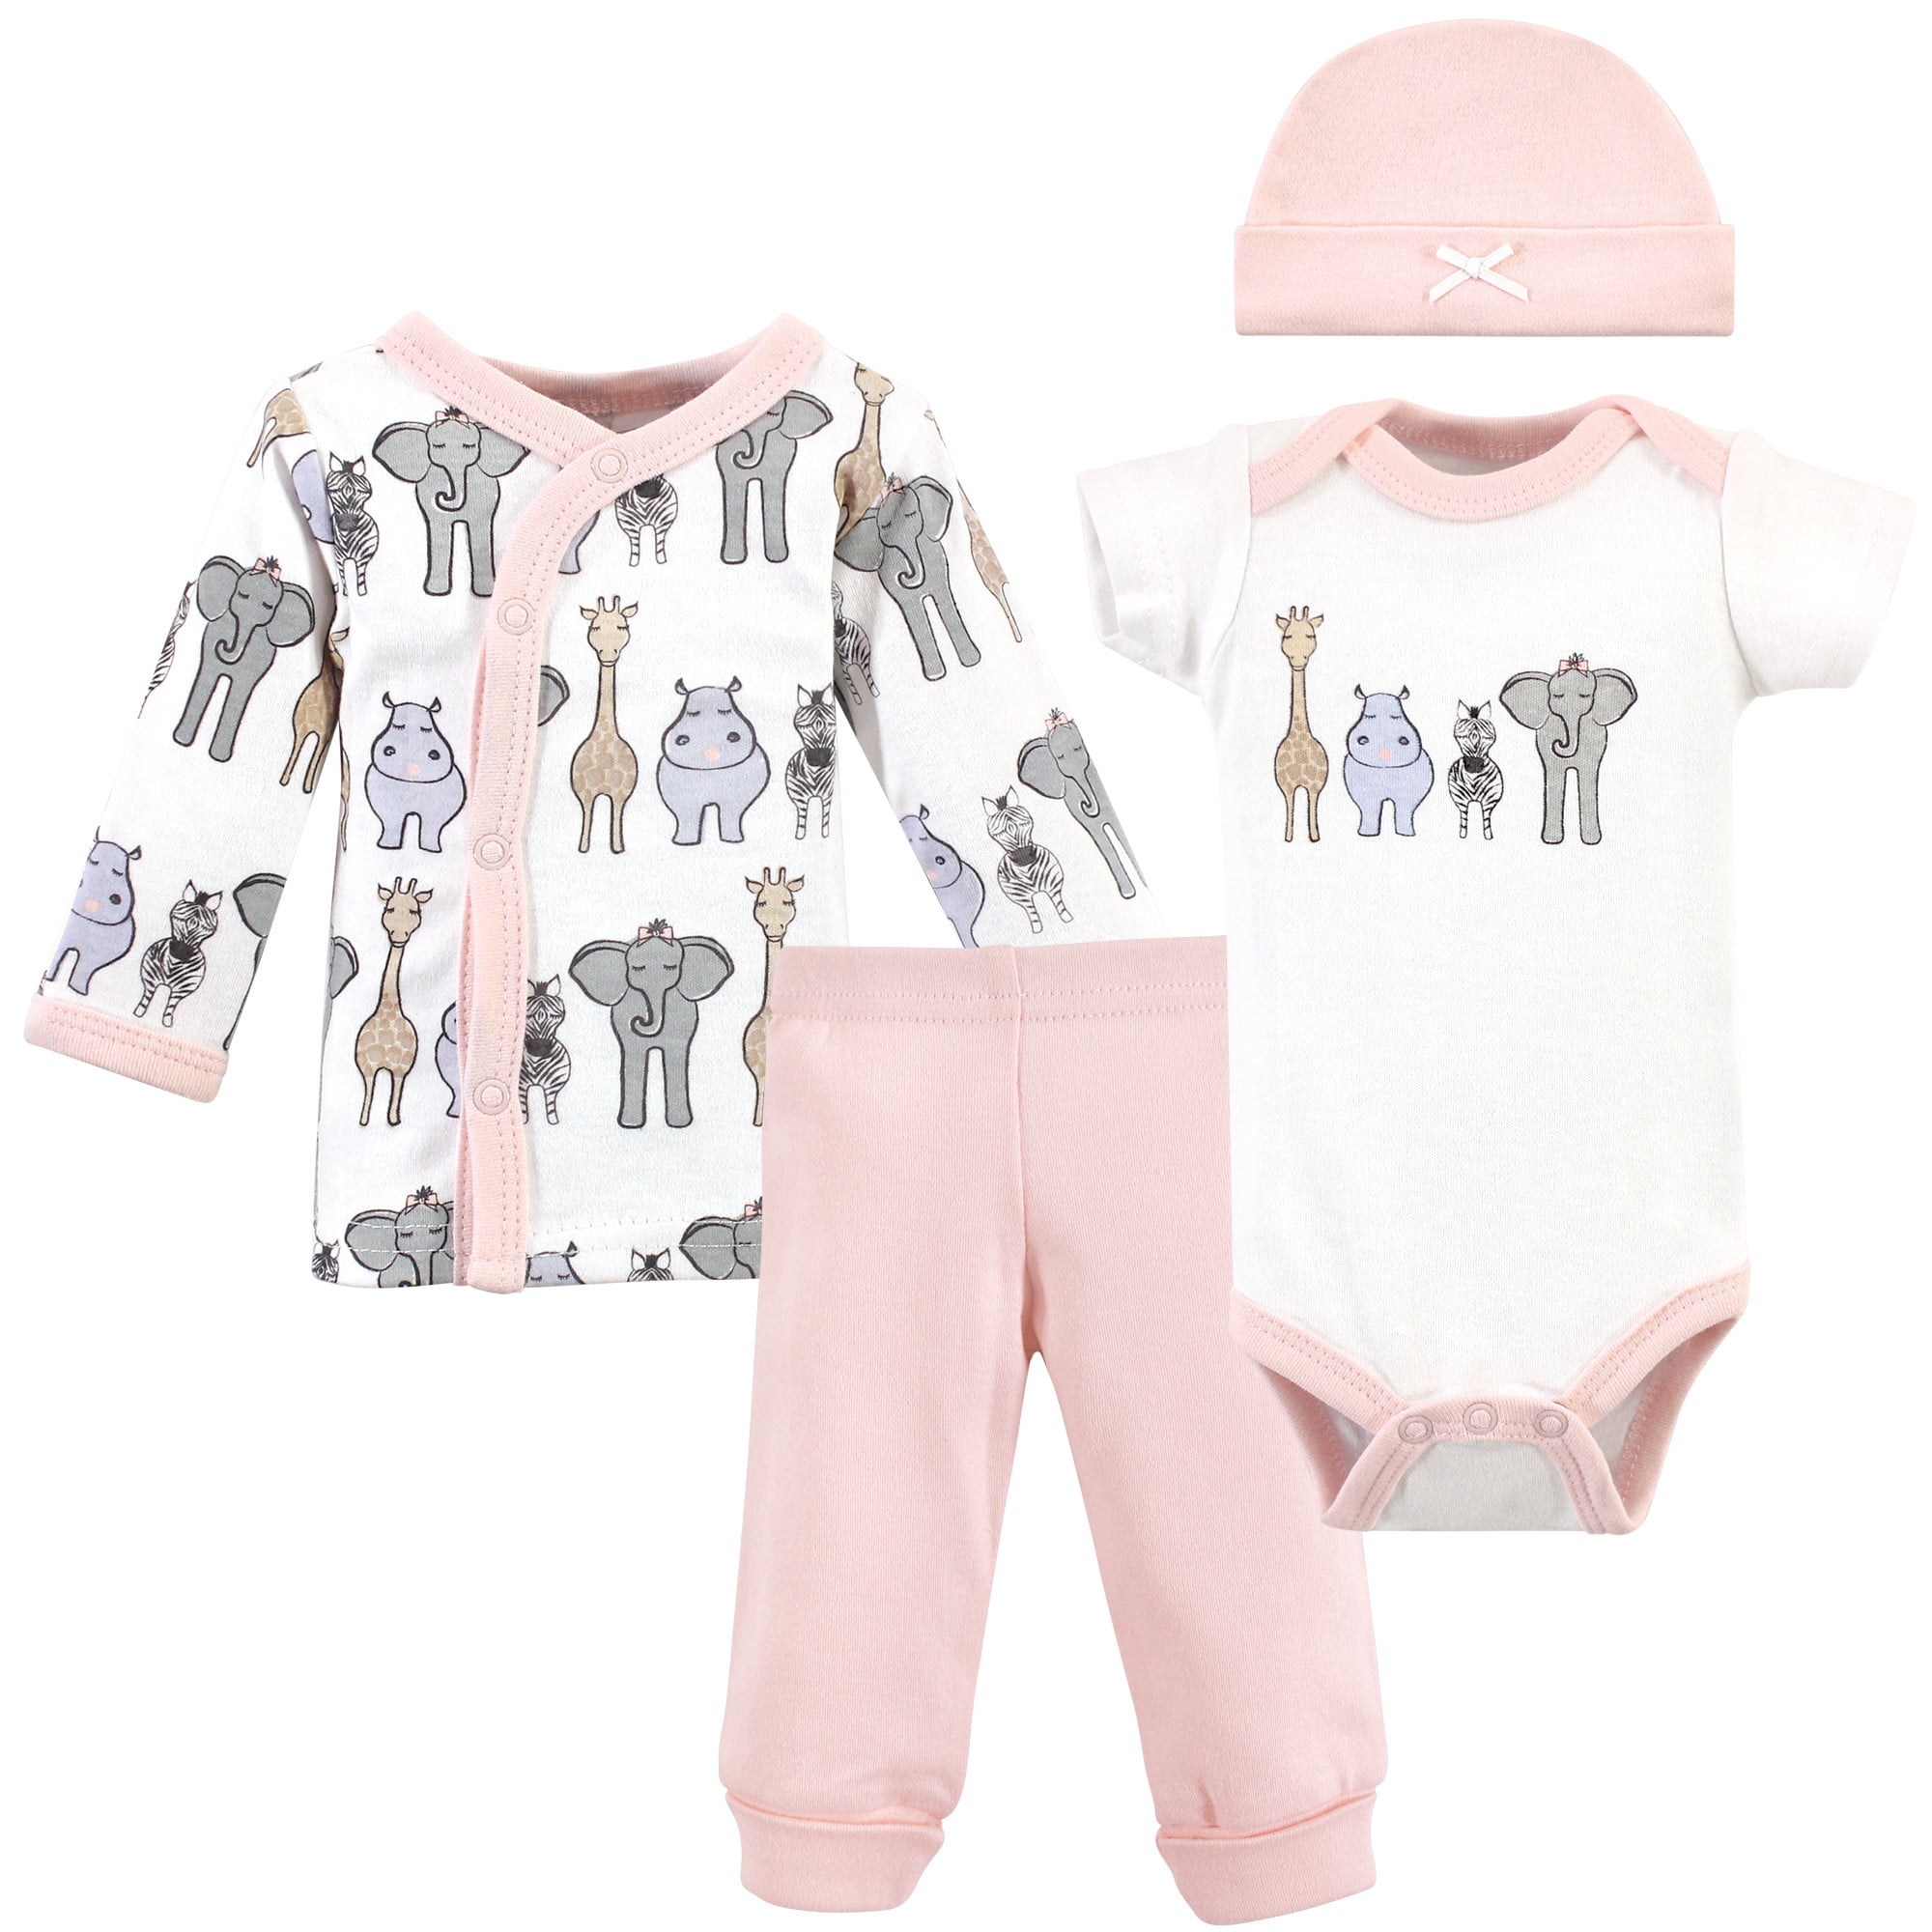 Preemie Baby Clothes - Walmart.com